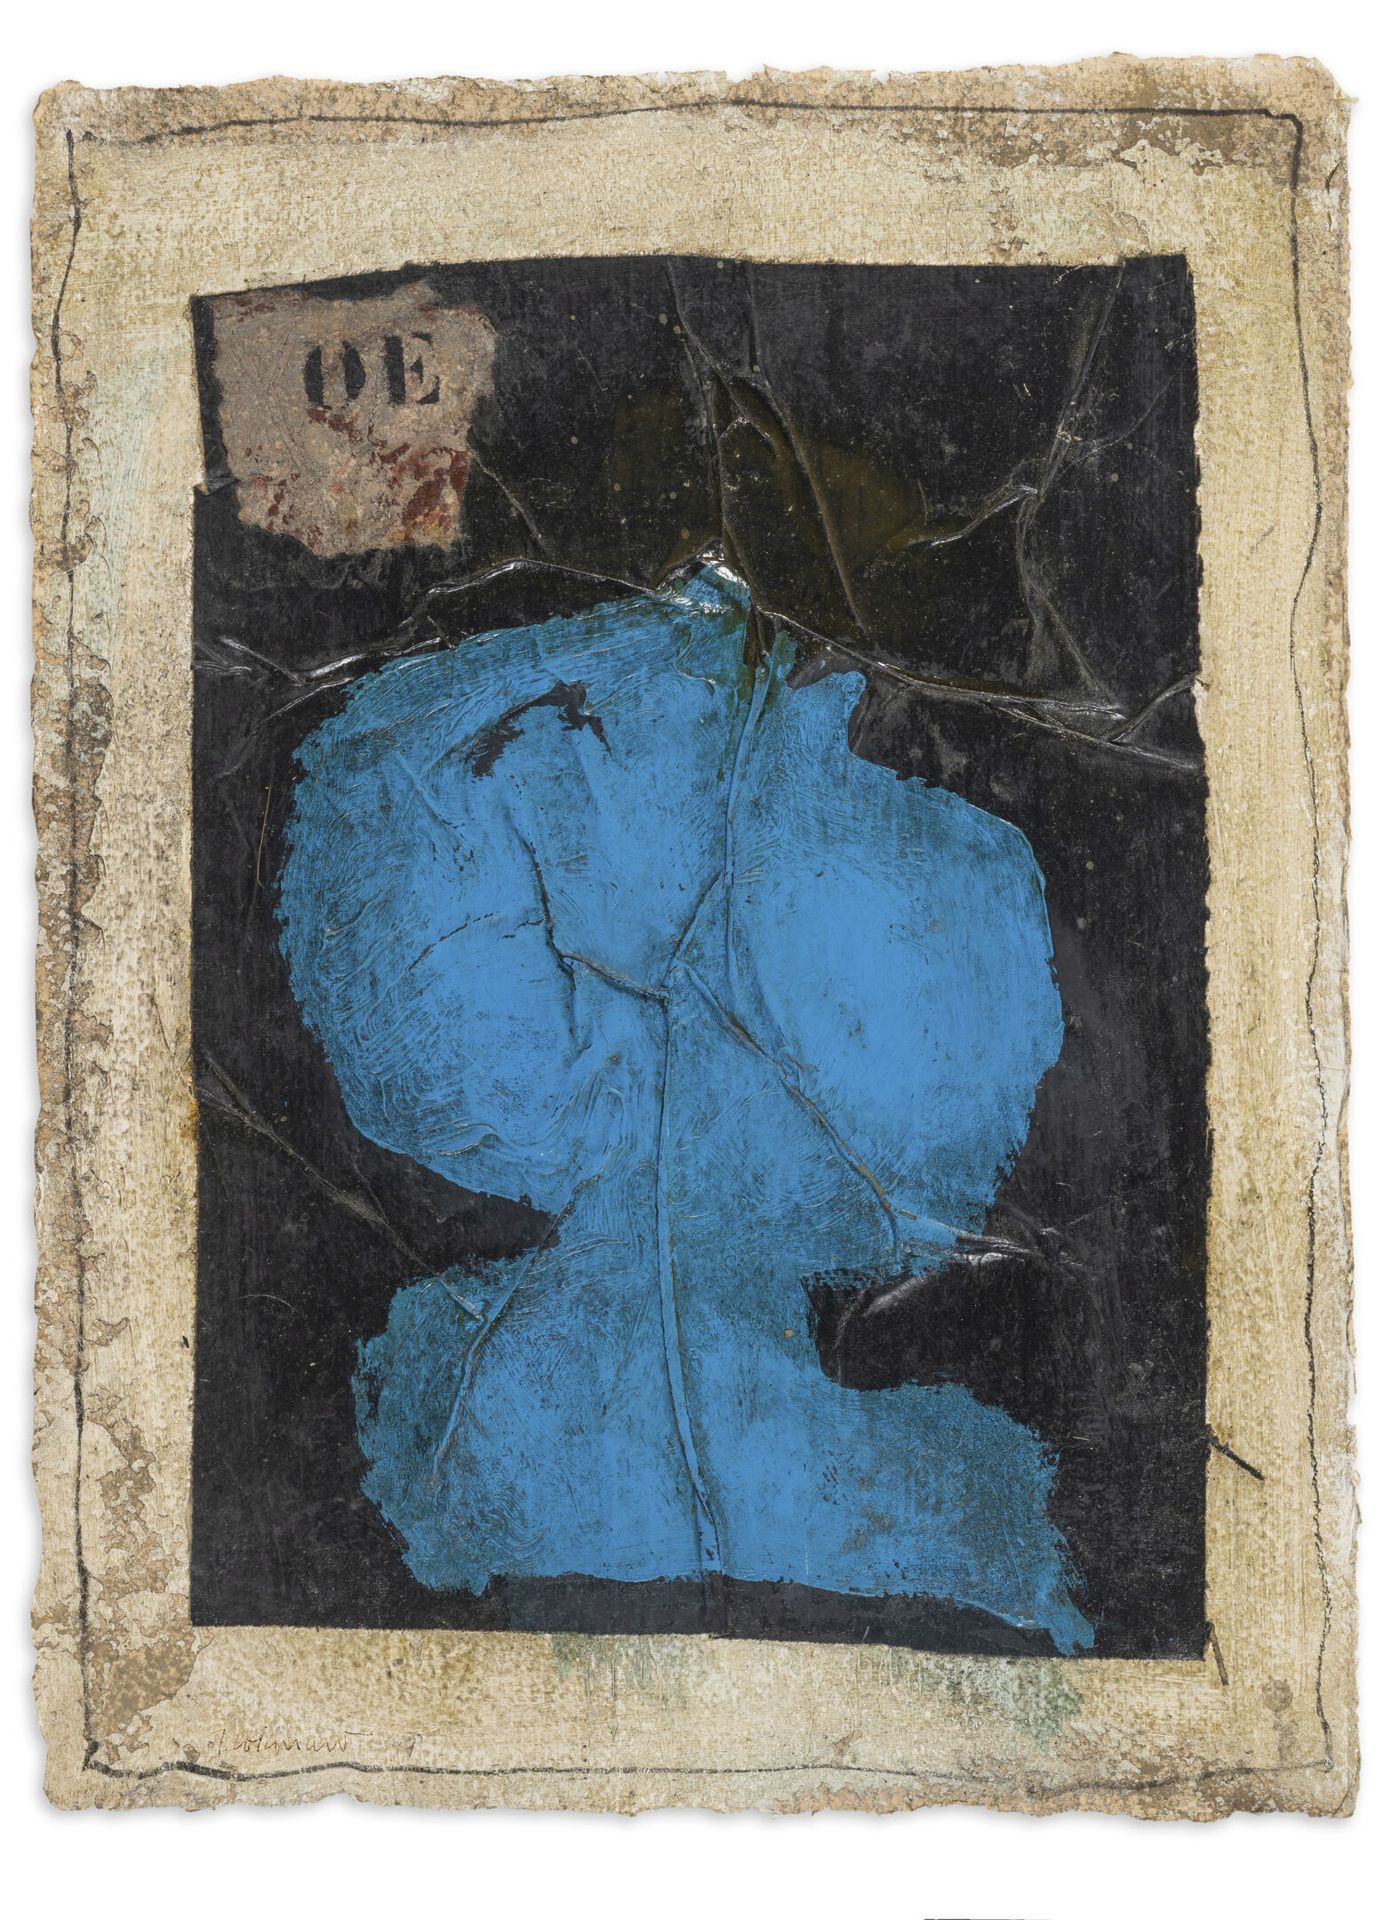 James COIGNARD (1925-2008) 无题。
纸上混合媒体。
左下方有签名 
38 x 29厘米。
褶皱和污渍。